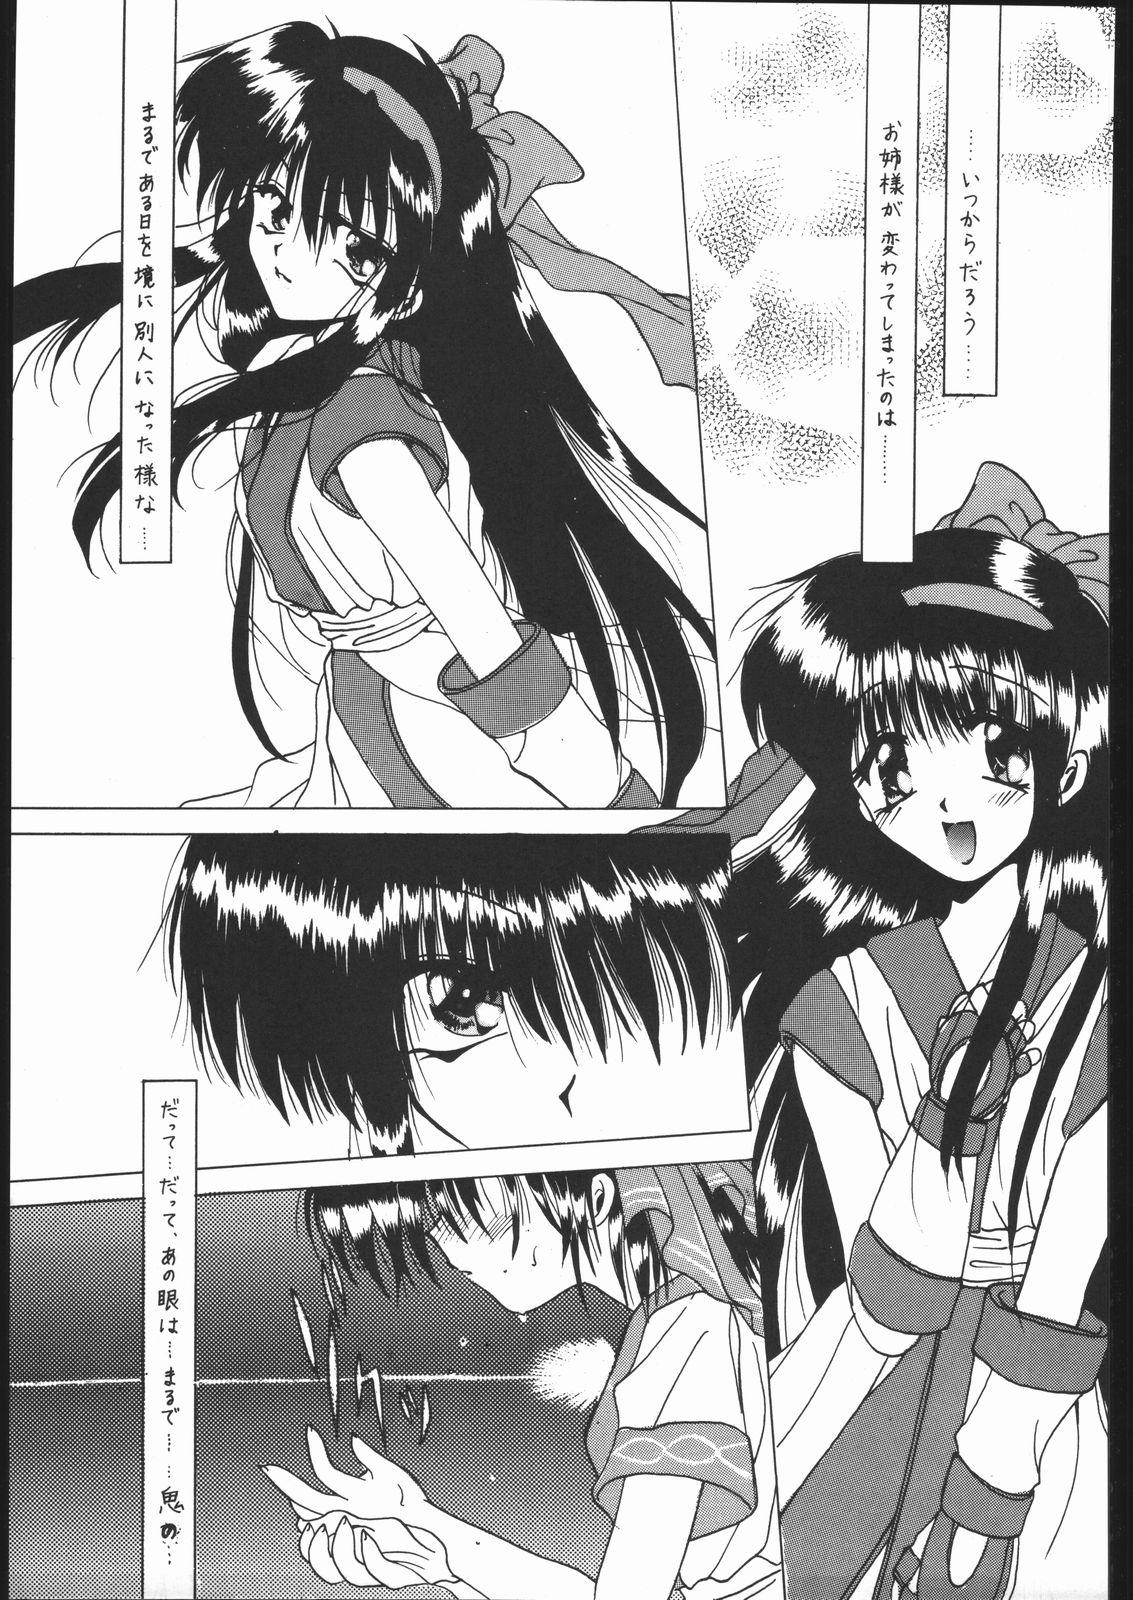 Solo Female Honkan ha na mura beni suzaku no ma - Samurai spirits Cums - Page 3